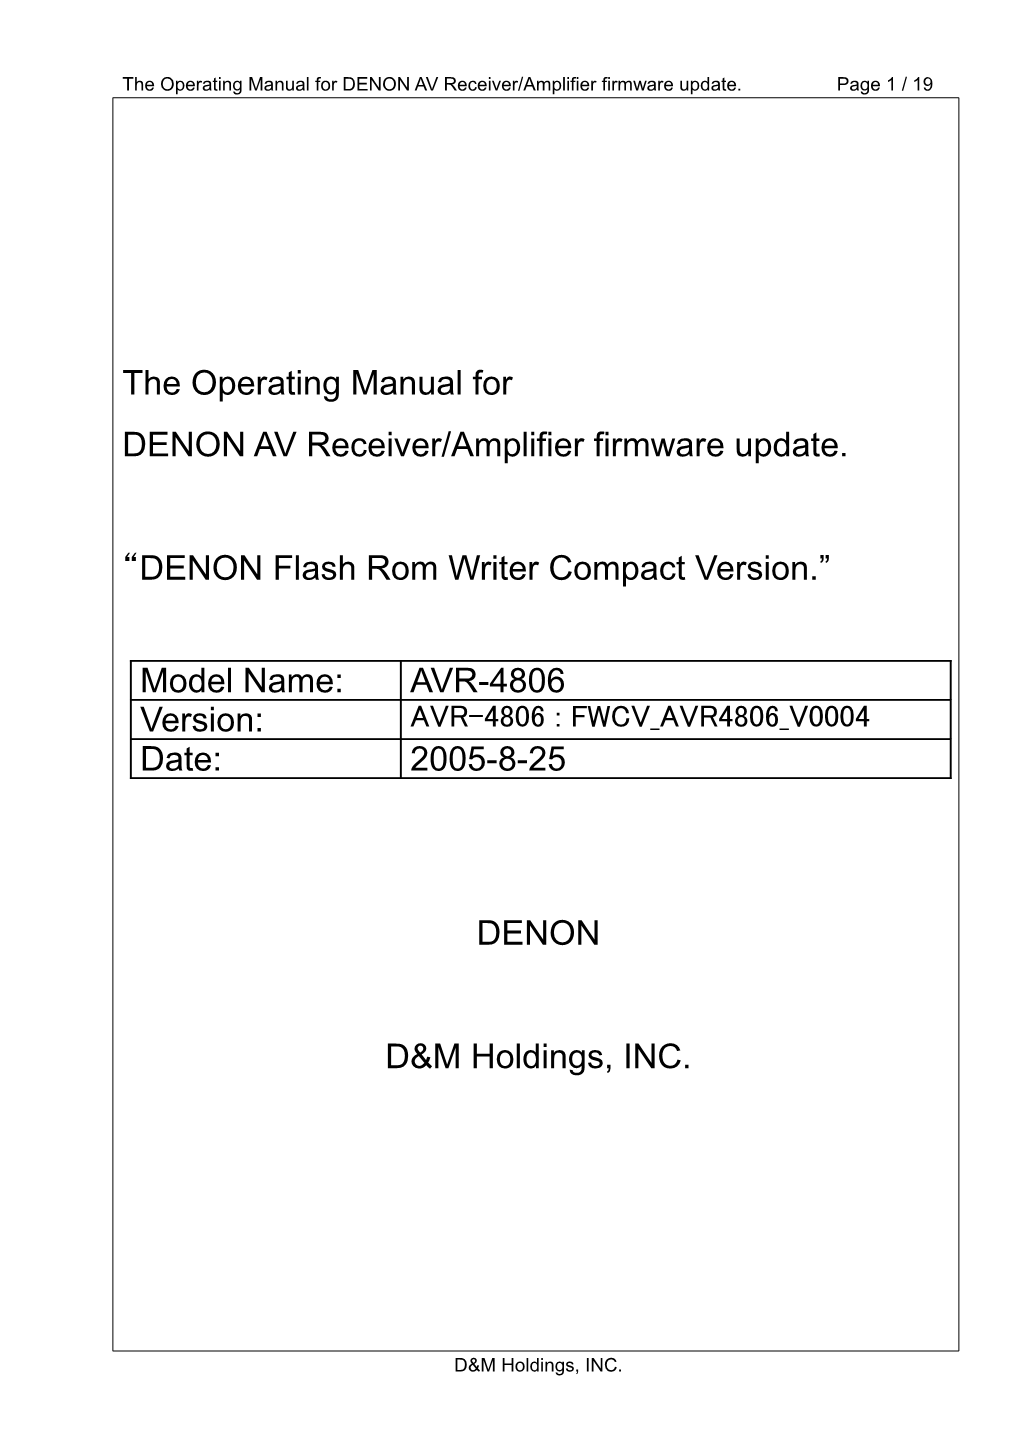 The Operating Manual for DENON AV Receiver/Amplifier Firmware Update